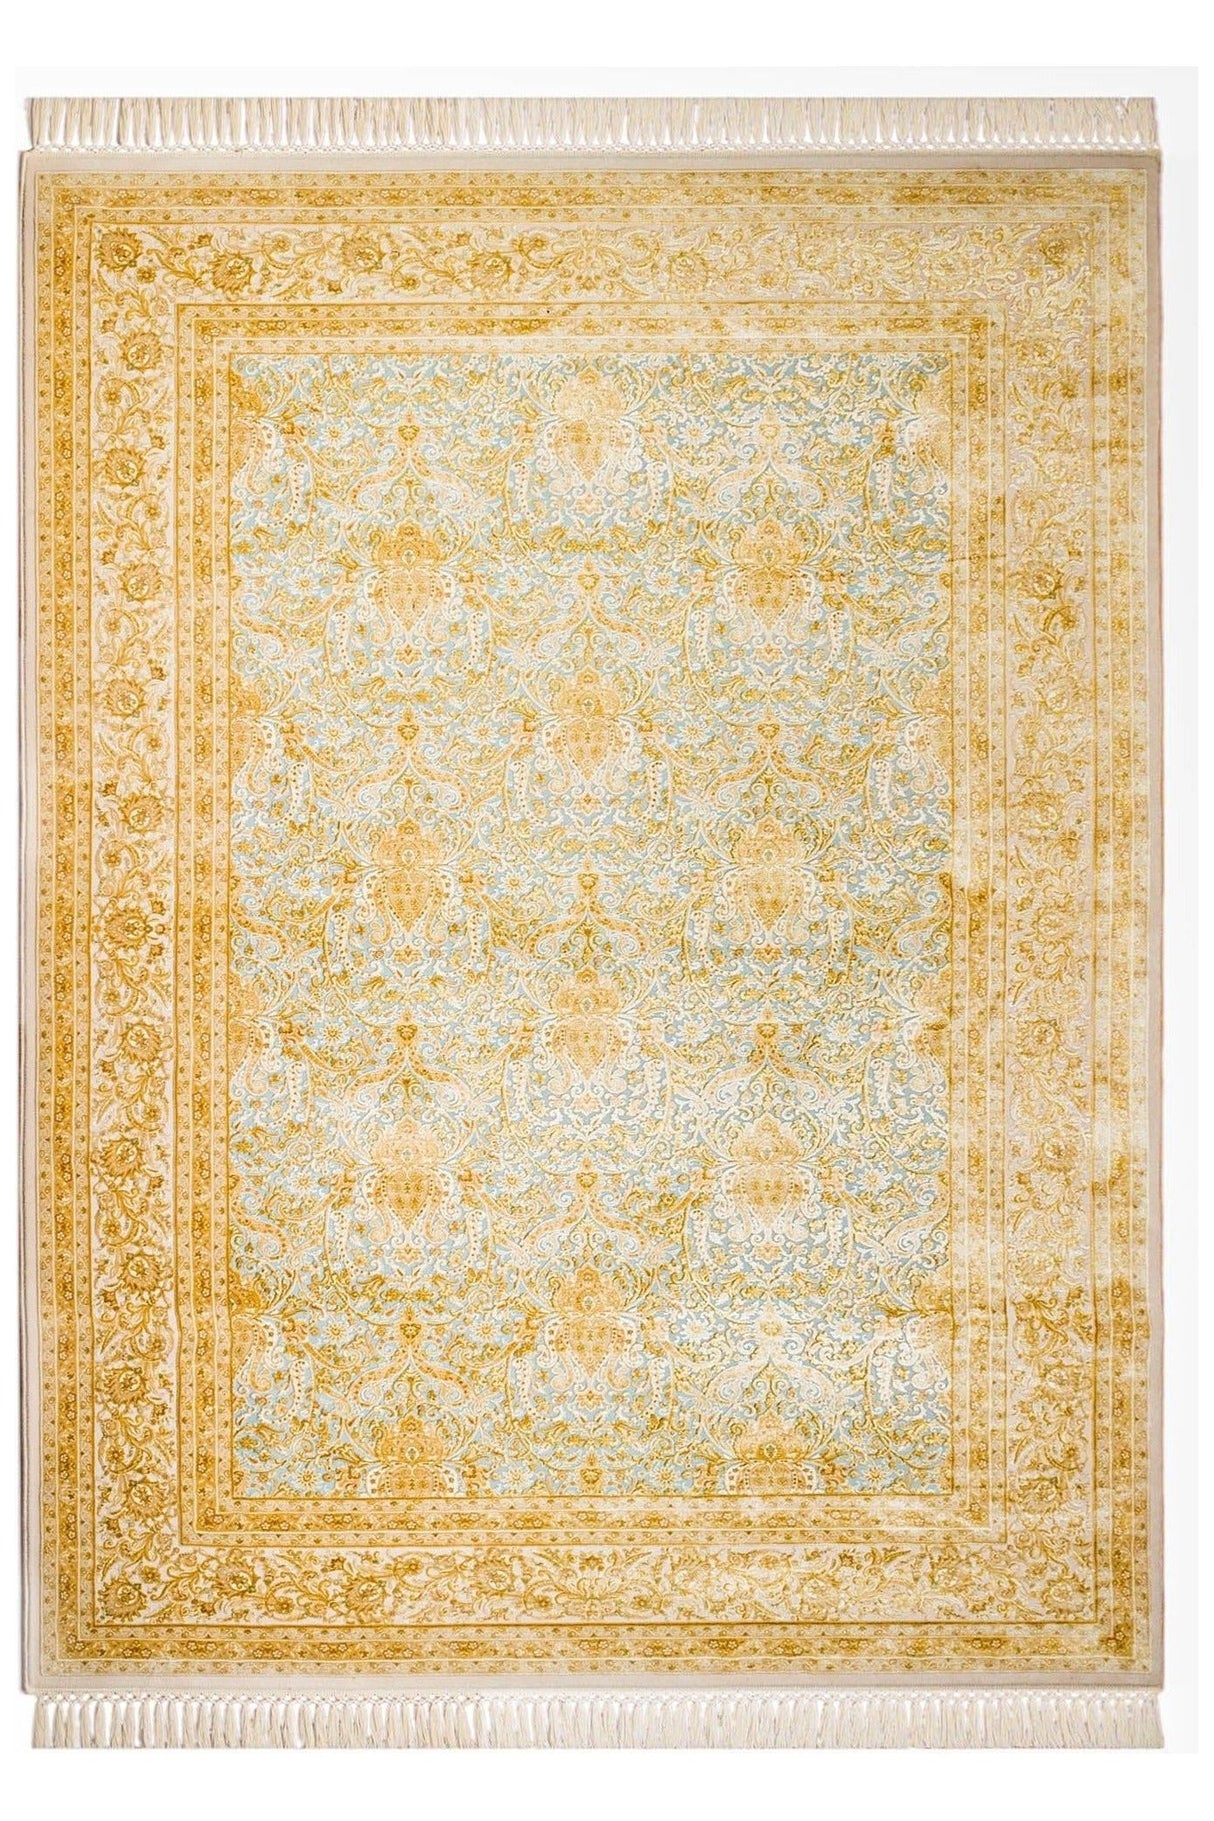 #Turkish_Carpets_Rugs# #Modern_Carpets# #Abrash_Carpets#Abrash-18005275-230x160